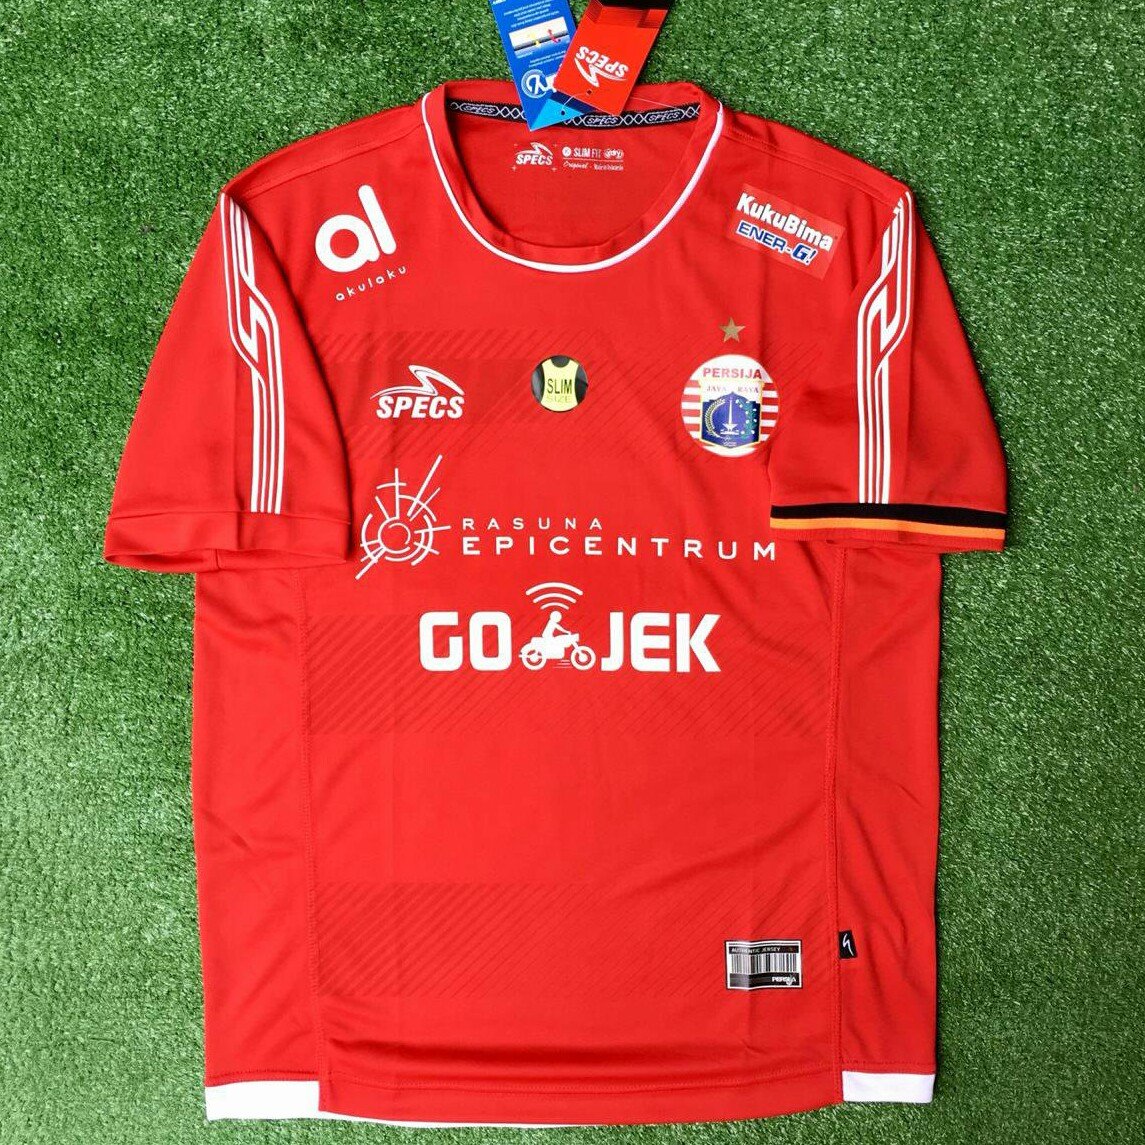 Persija Jakarta Home football shirt 2018 - 2019. Sponsored by Go Jek